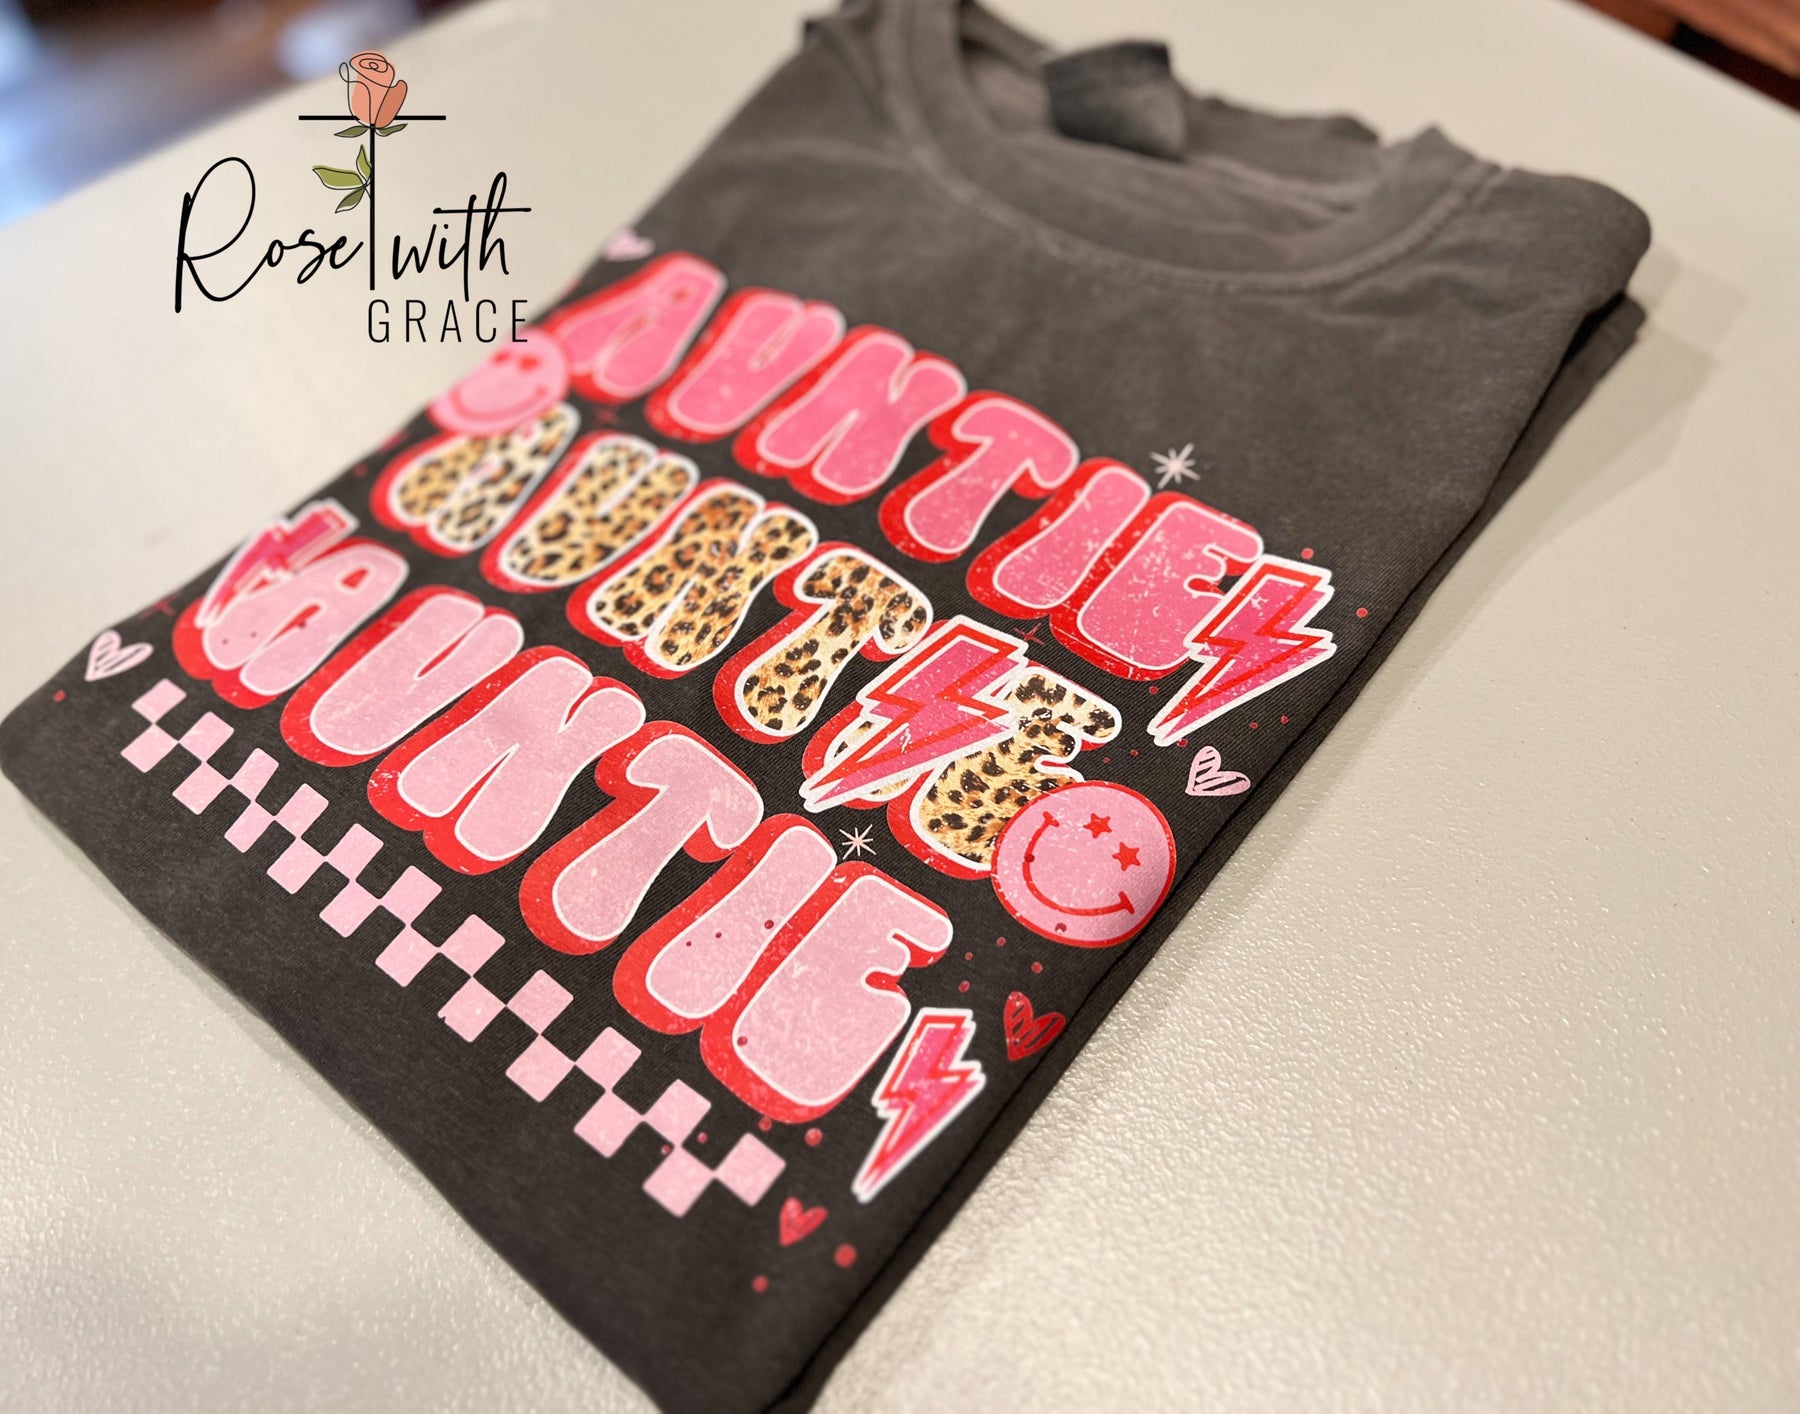 Hot Pink Leopard Auntie Comfort Colors T Shirt Rose with Grace LLC